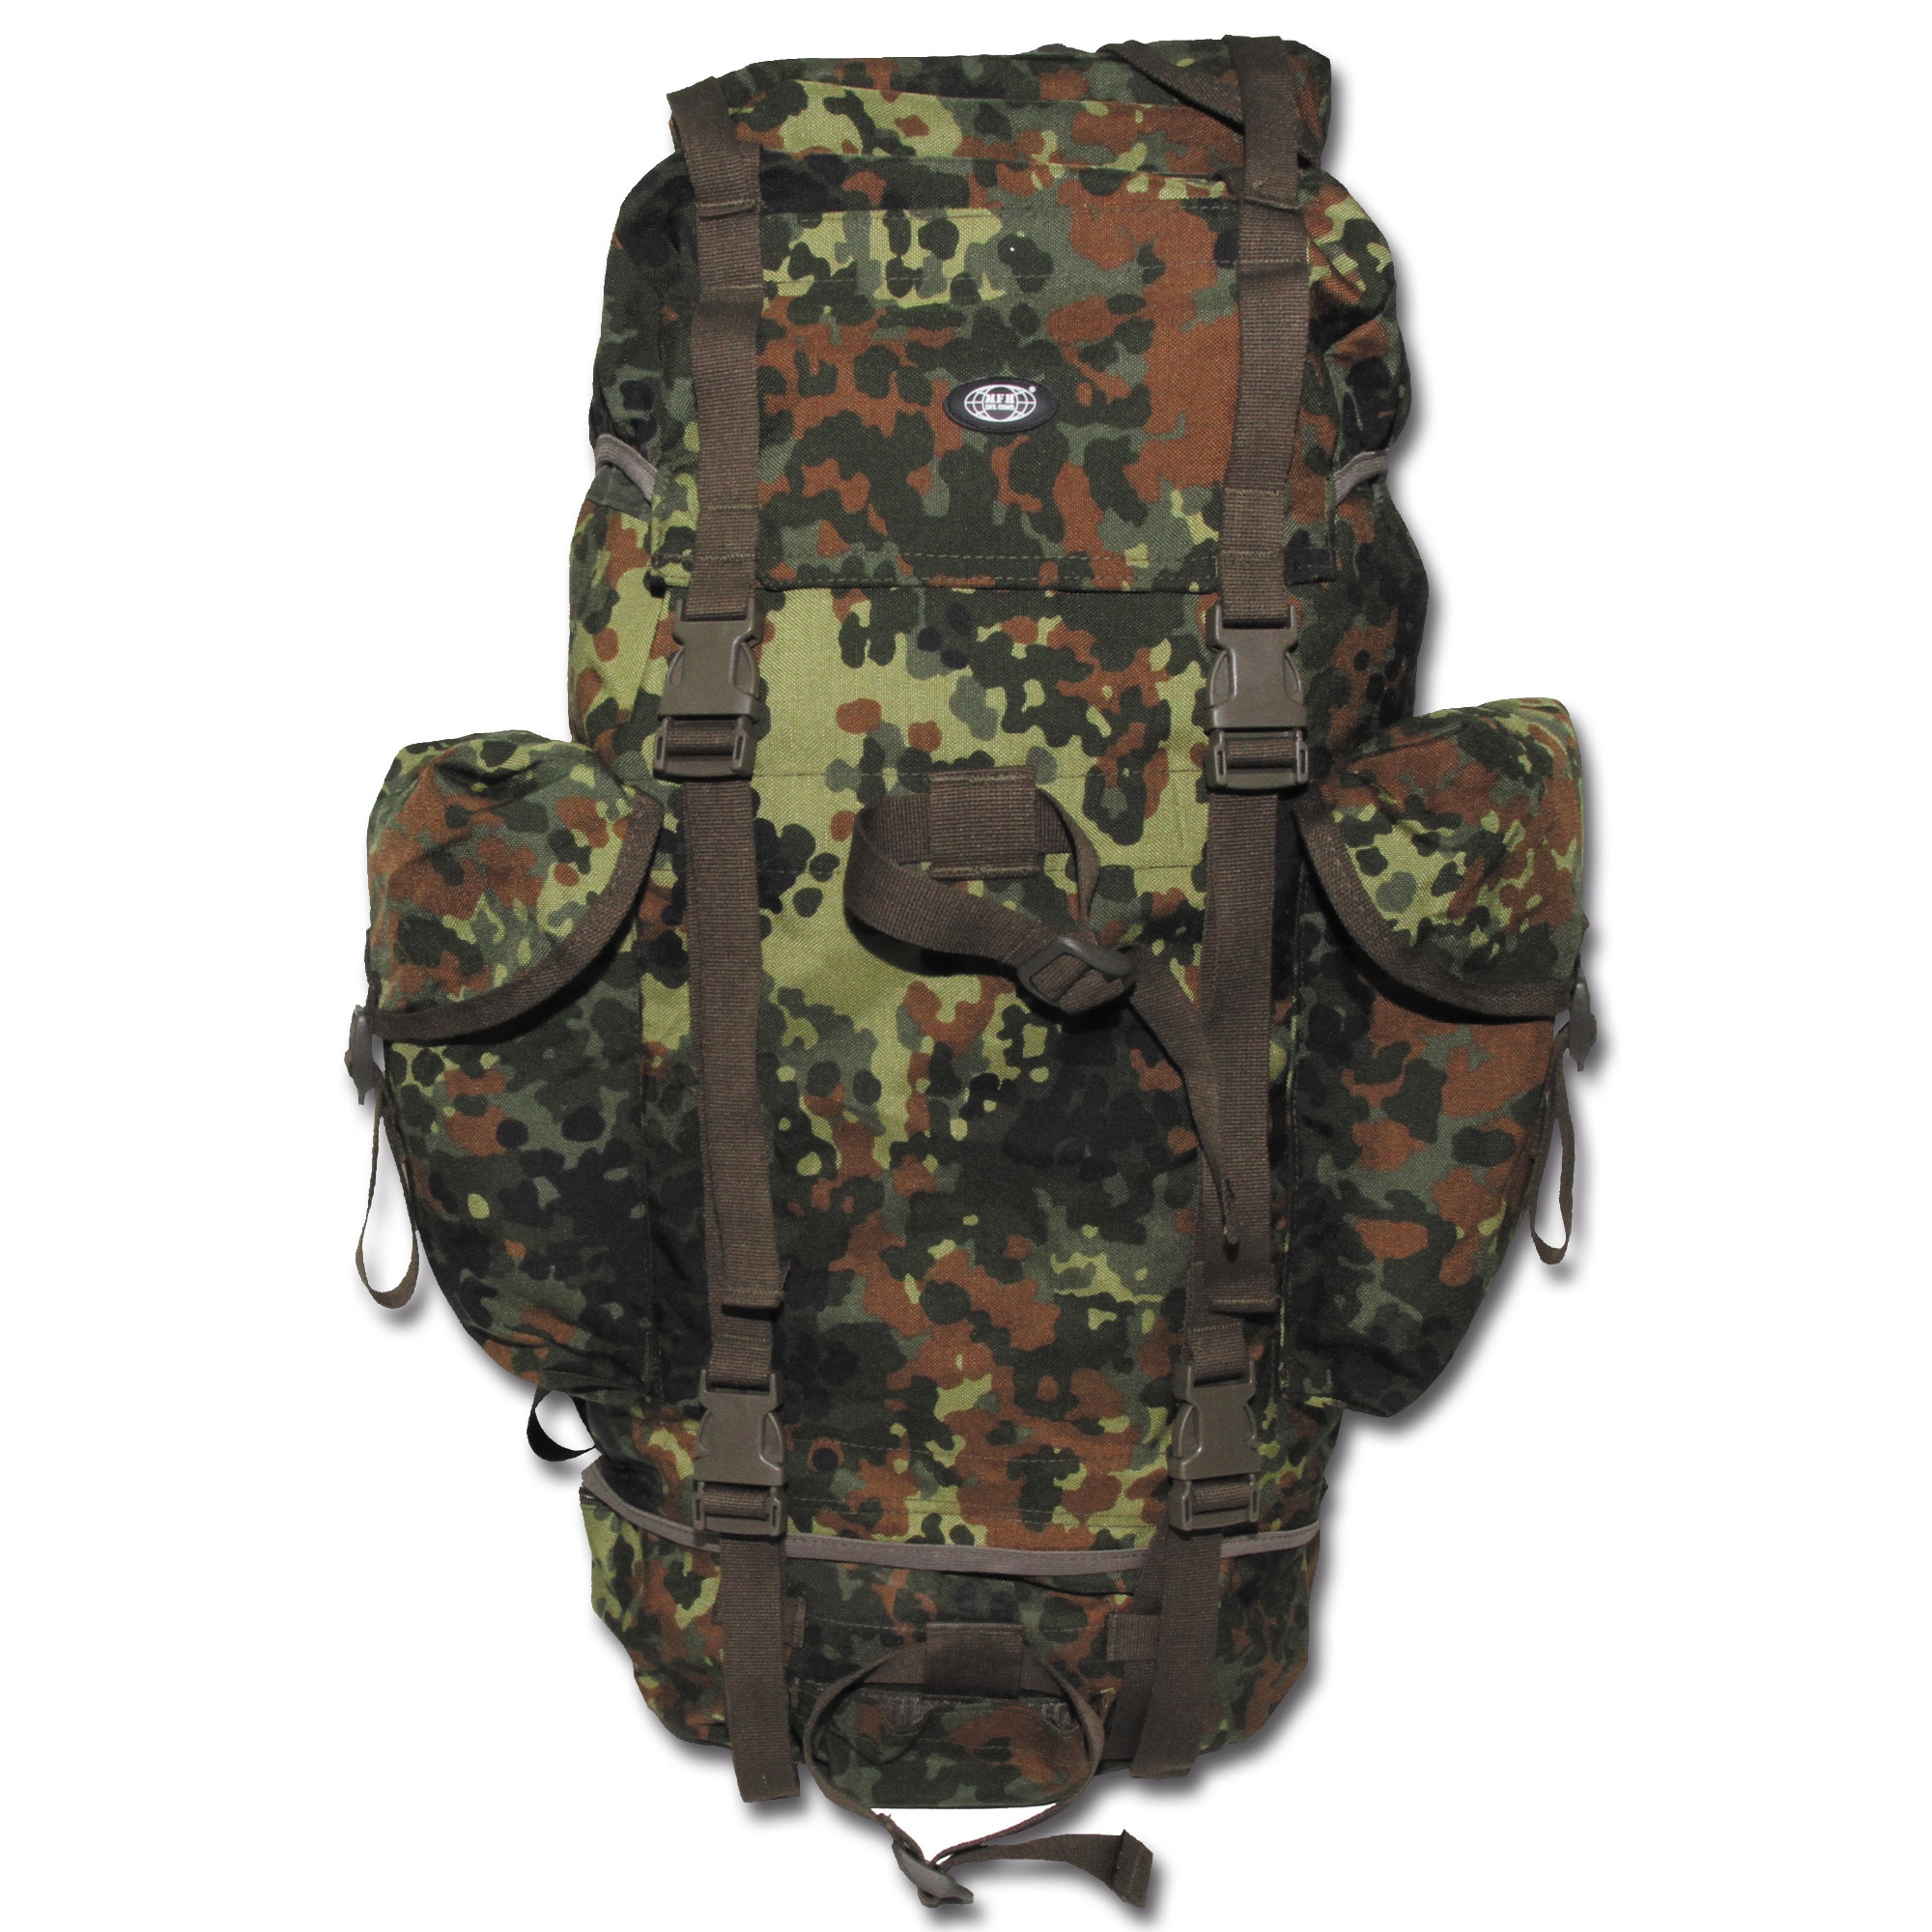 Purchase the BW Backpack Cordura flecktarn 65 l by ASMC